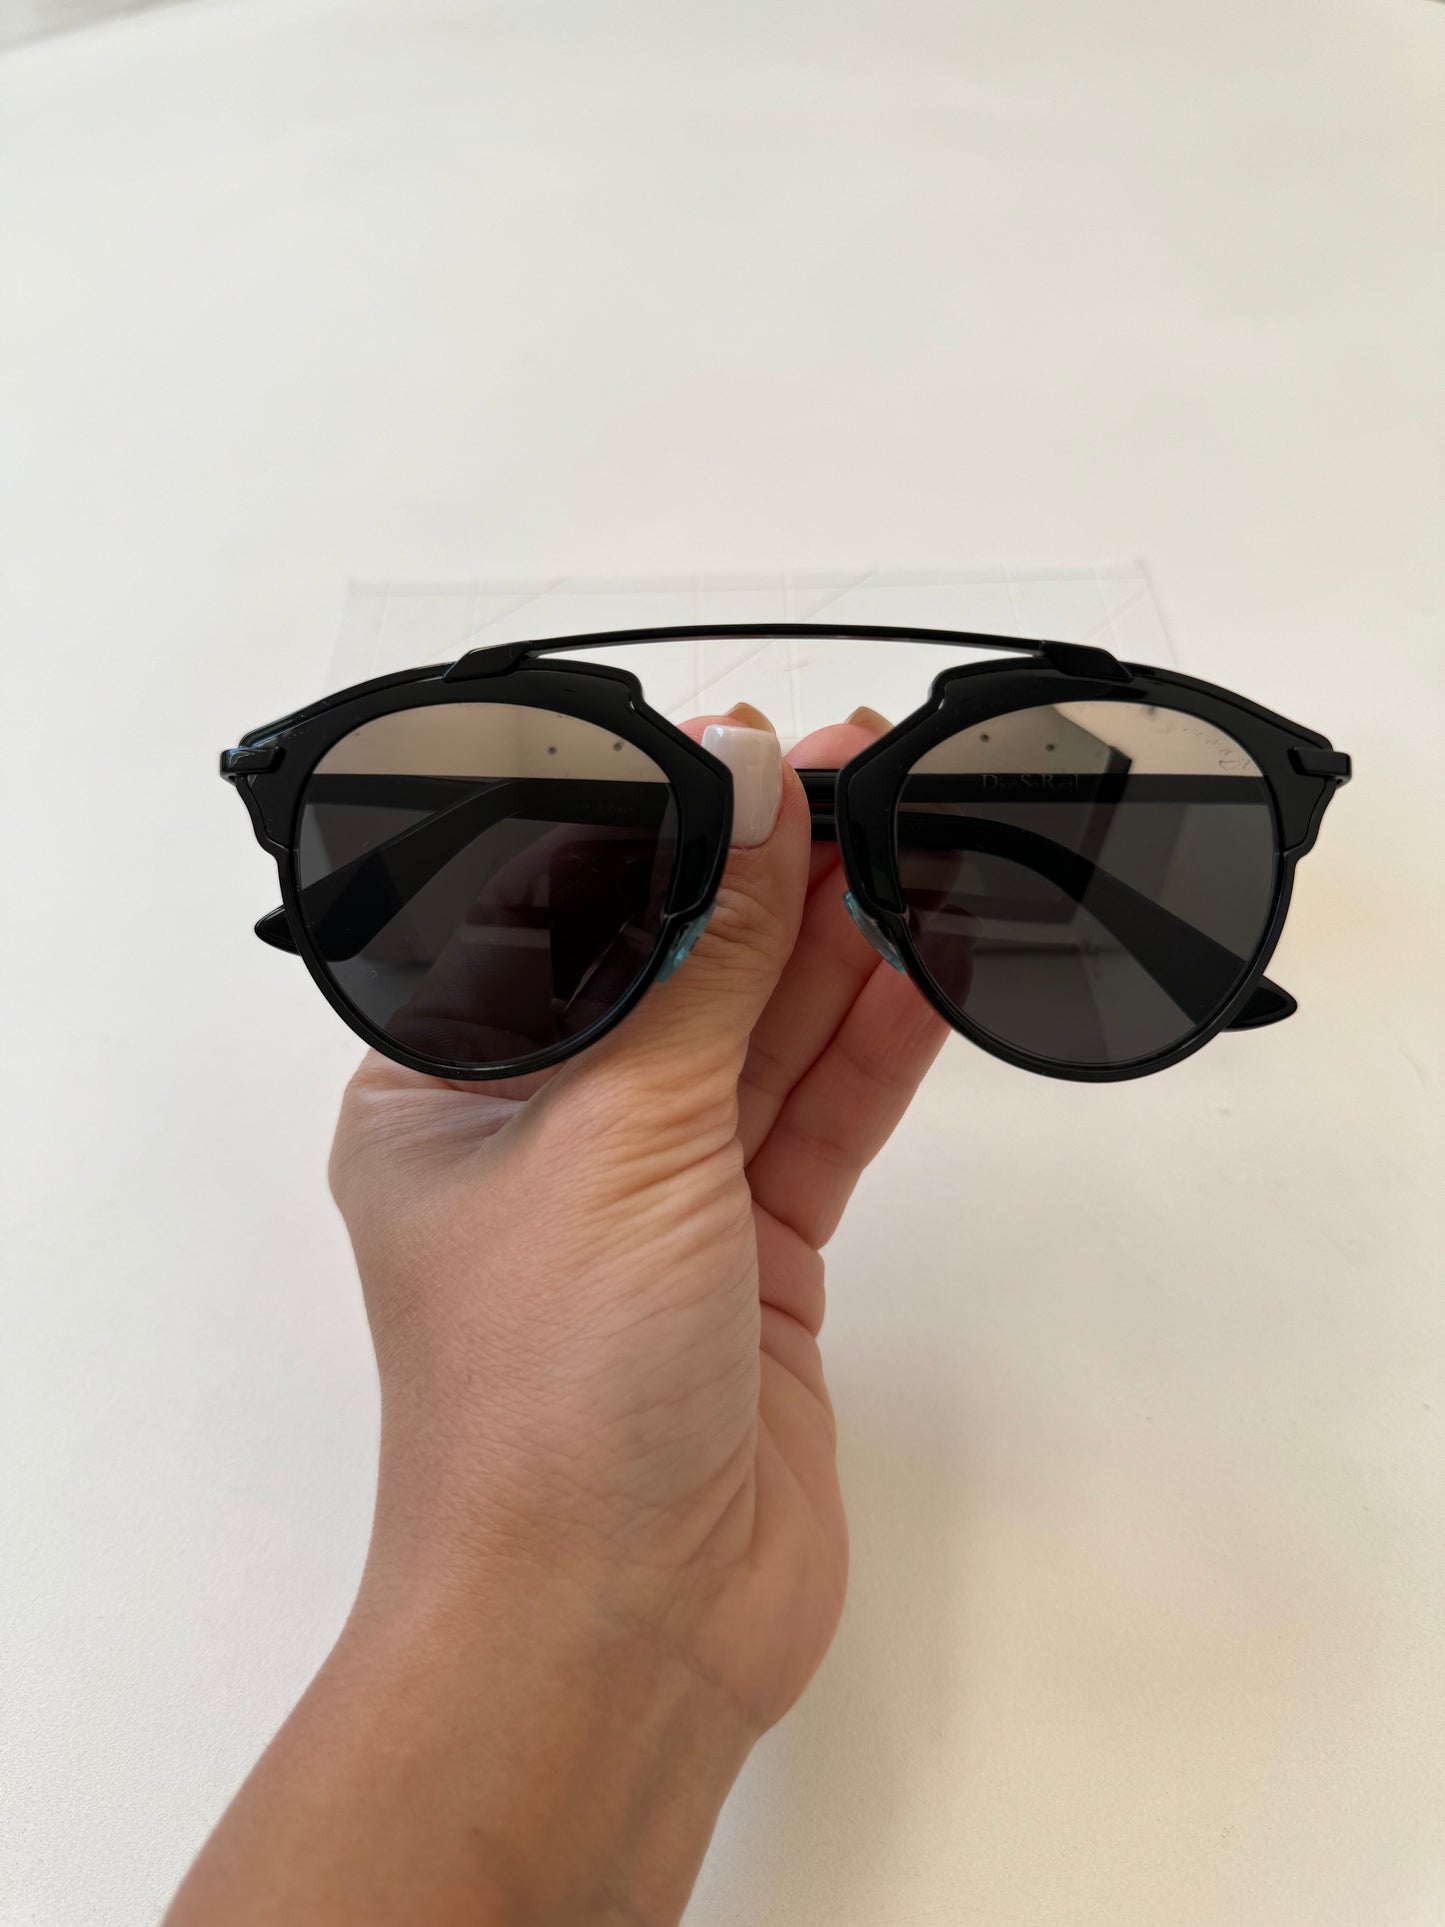 Dior So Real Black Silver Metal Plastic Aviator Gradient Mirrored Sunglasses